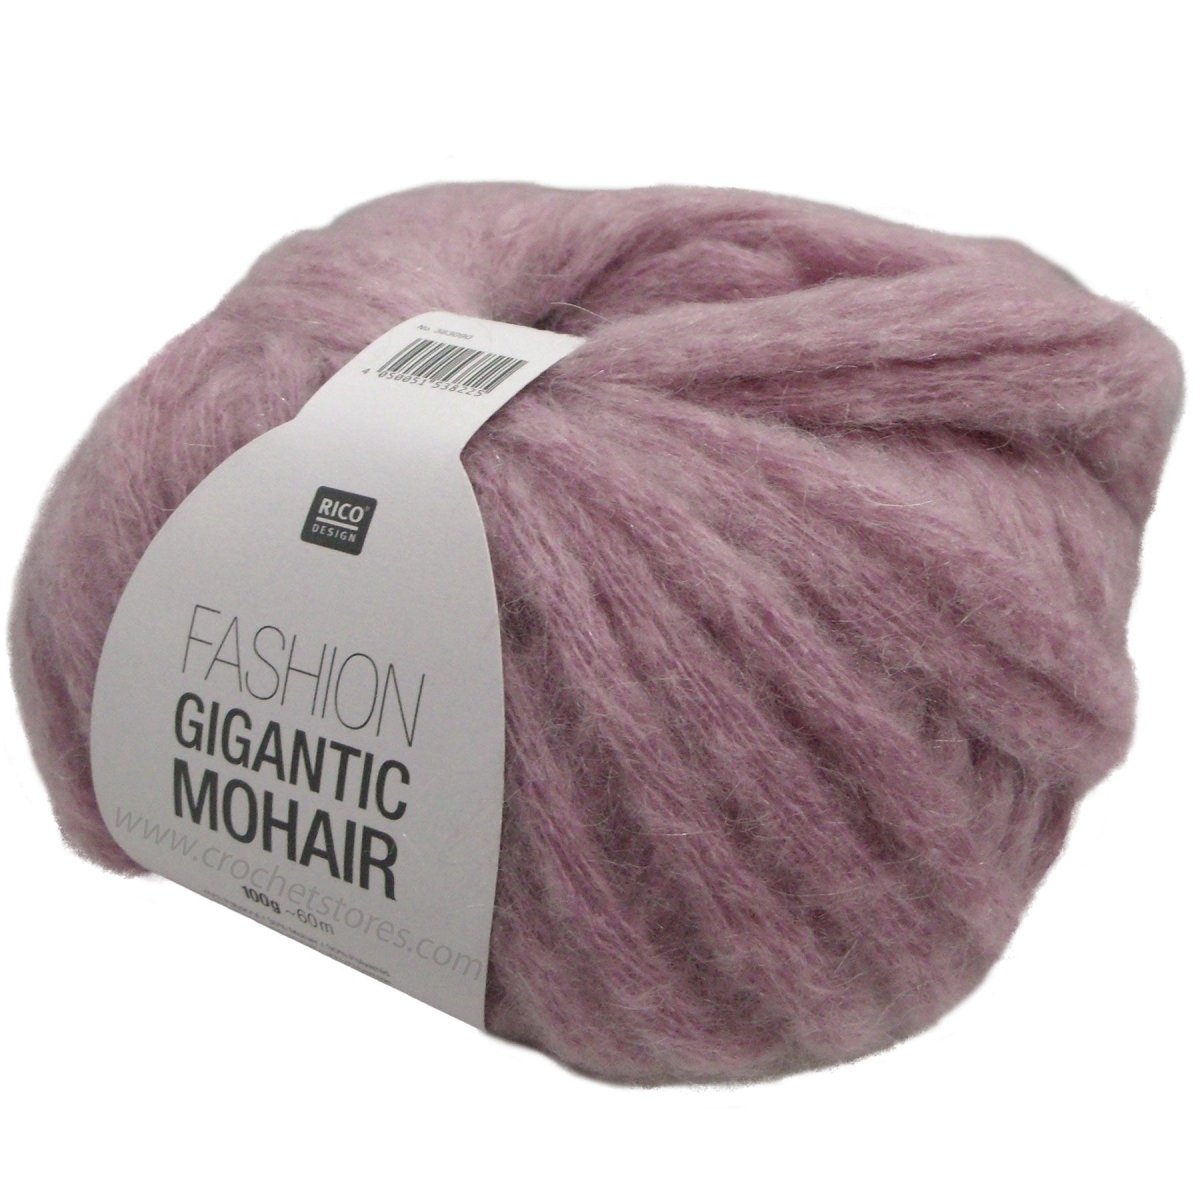 FASHION GIGANTIC MOHAIR - Crochetstores383090-0134050051538225